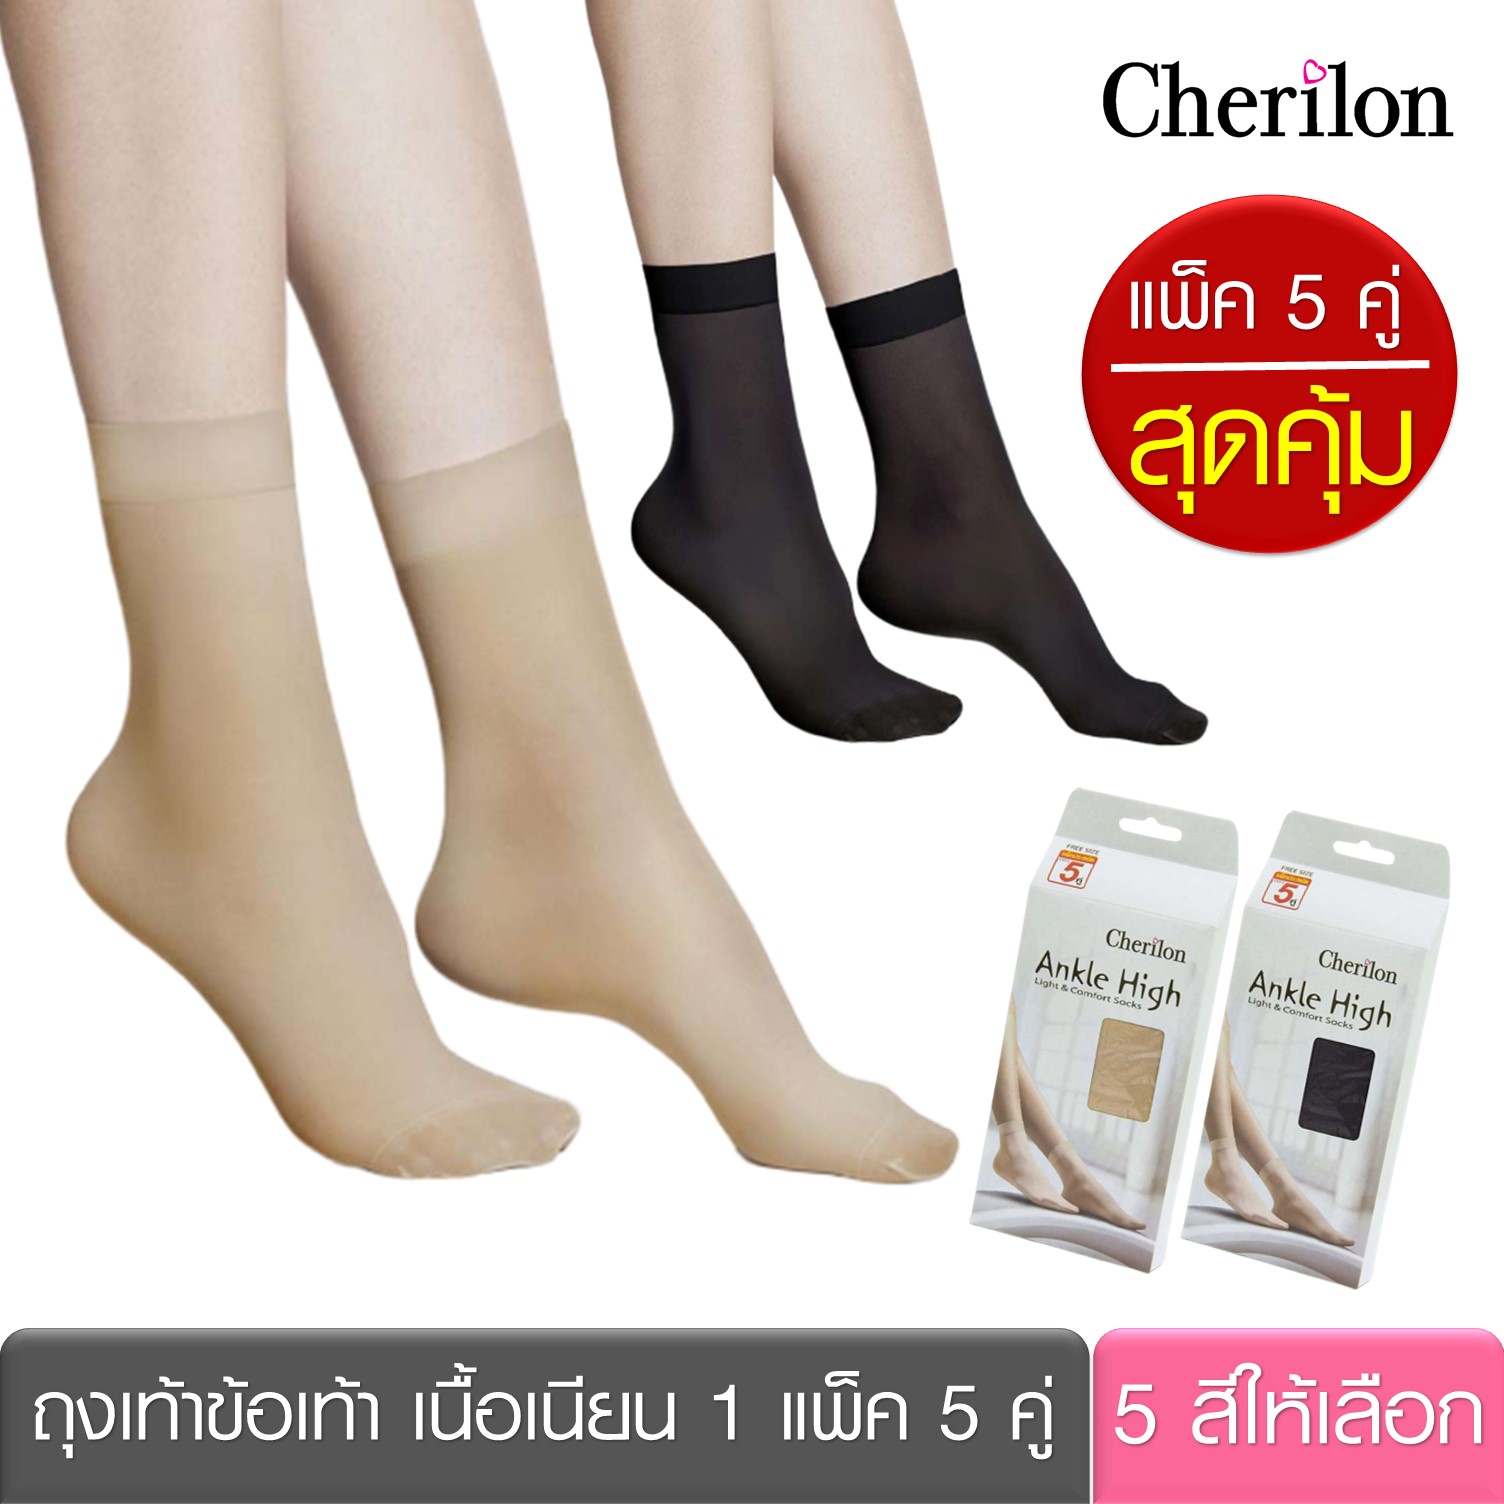 Cherilon เชอรีล่อน (2 แพ็ค = 10 คู่) ถุงเท้าข้อเท้า เนื้อเนียน นุ่ม ลดเหงื่อใต้ฝ่าเท้า ป้องกันรองเท้ากัด หรือใช้สำหรับลองรองเท้า NSB-5ANH (2 P)